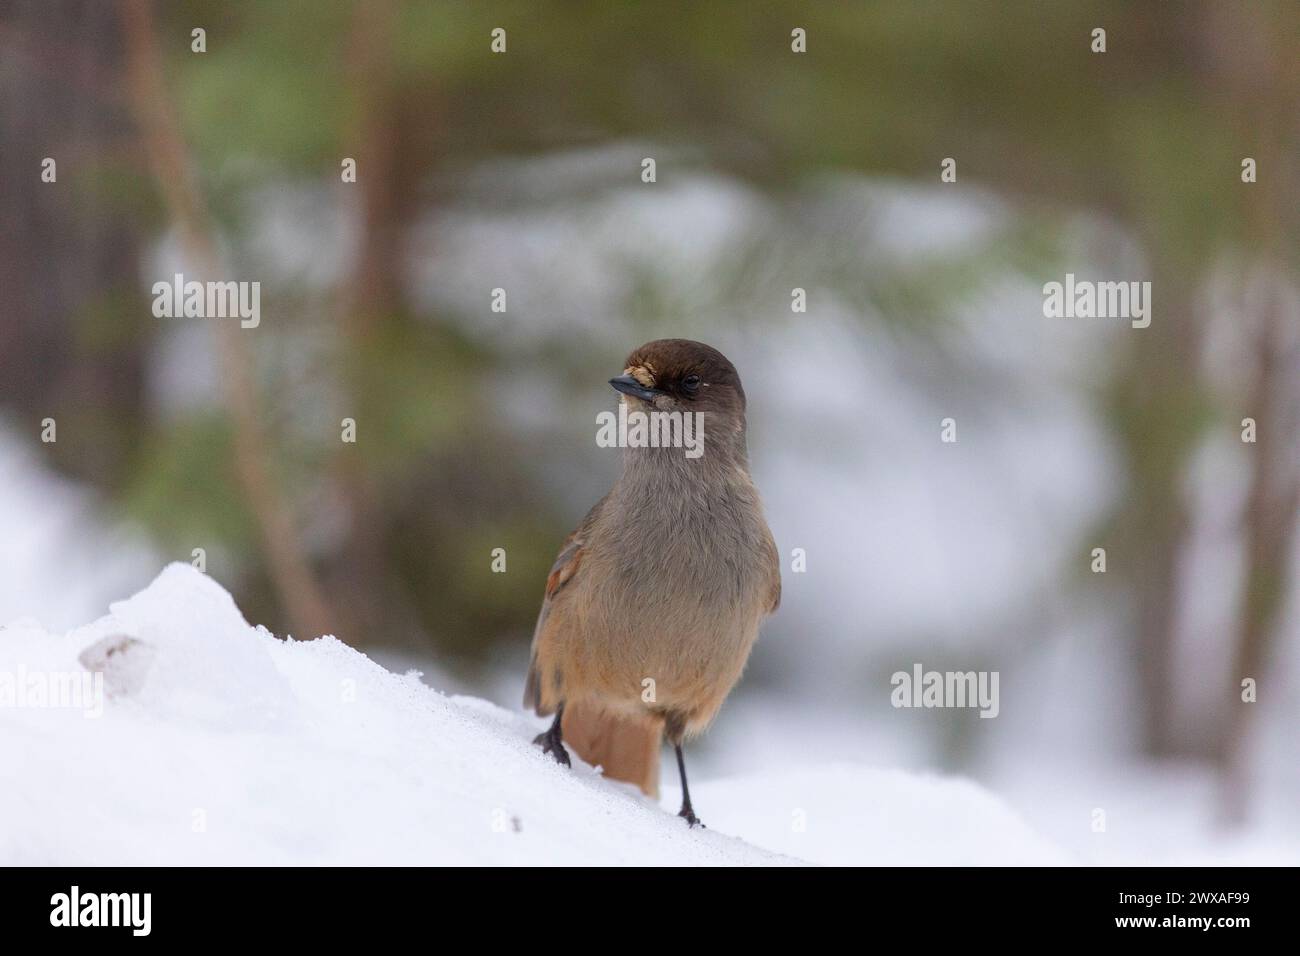 Siberian jay sitting on the snow close up Stock Photo